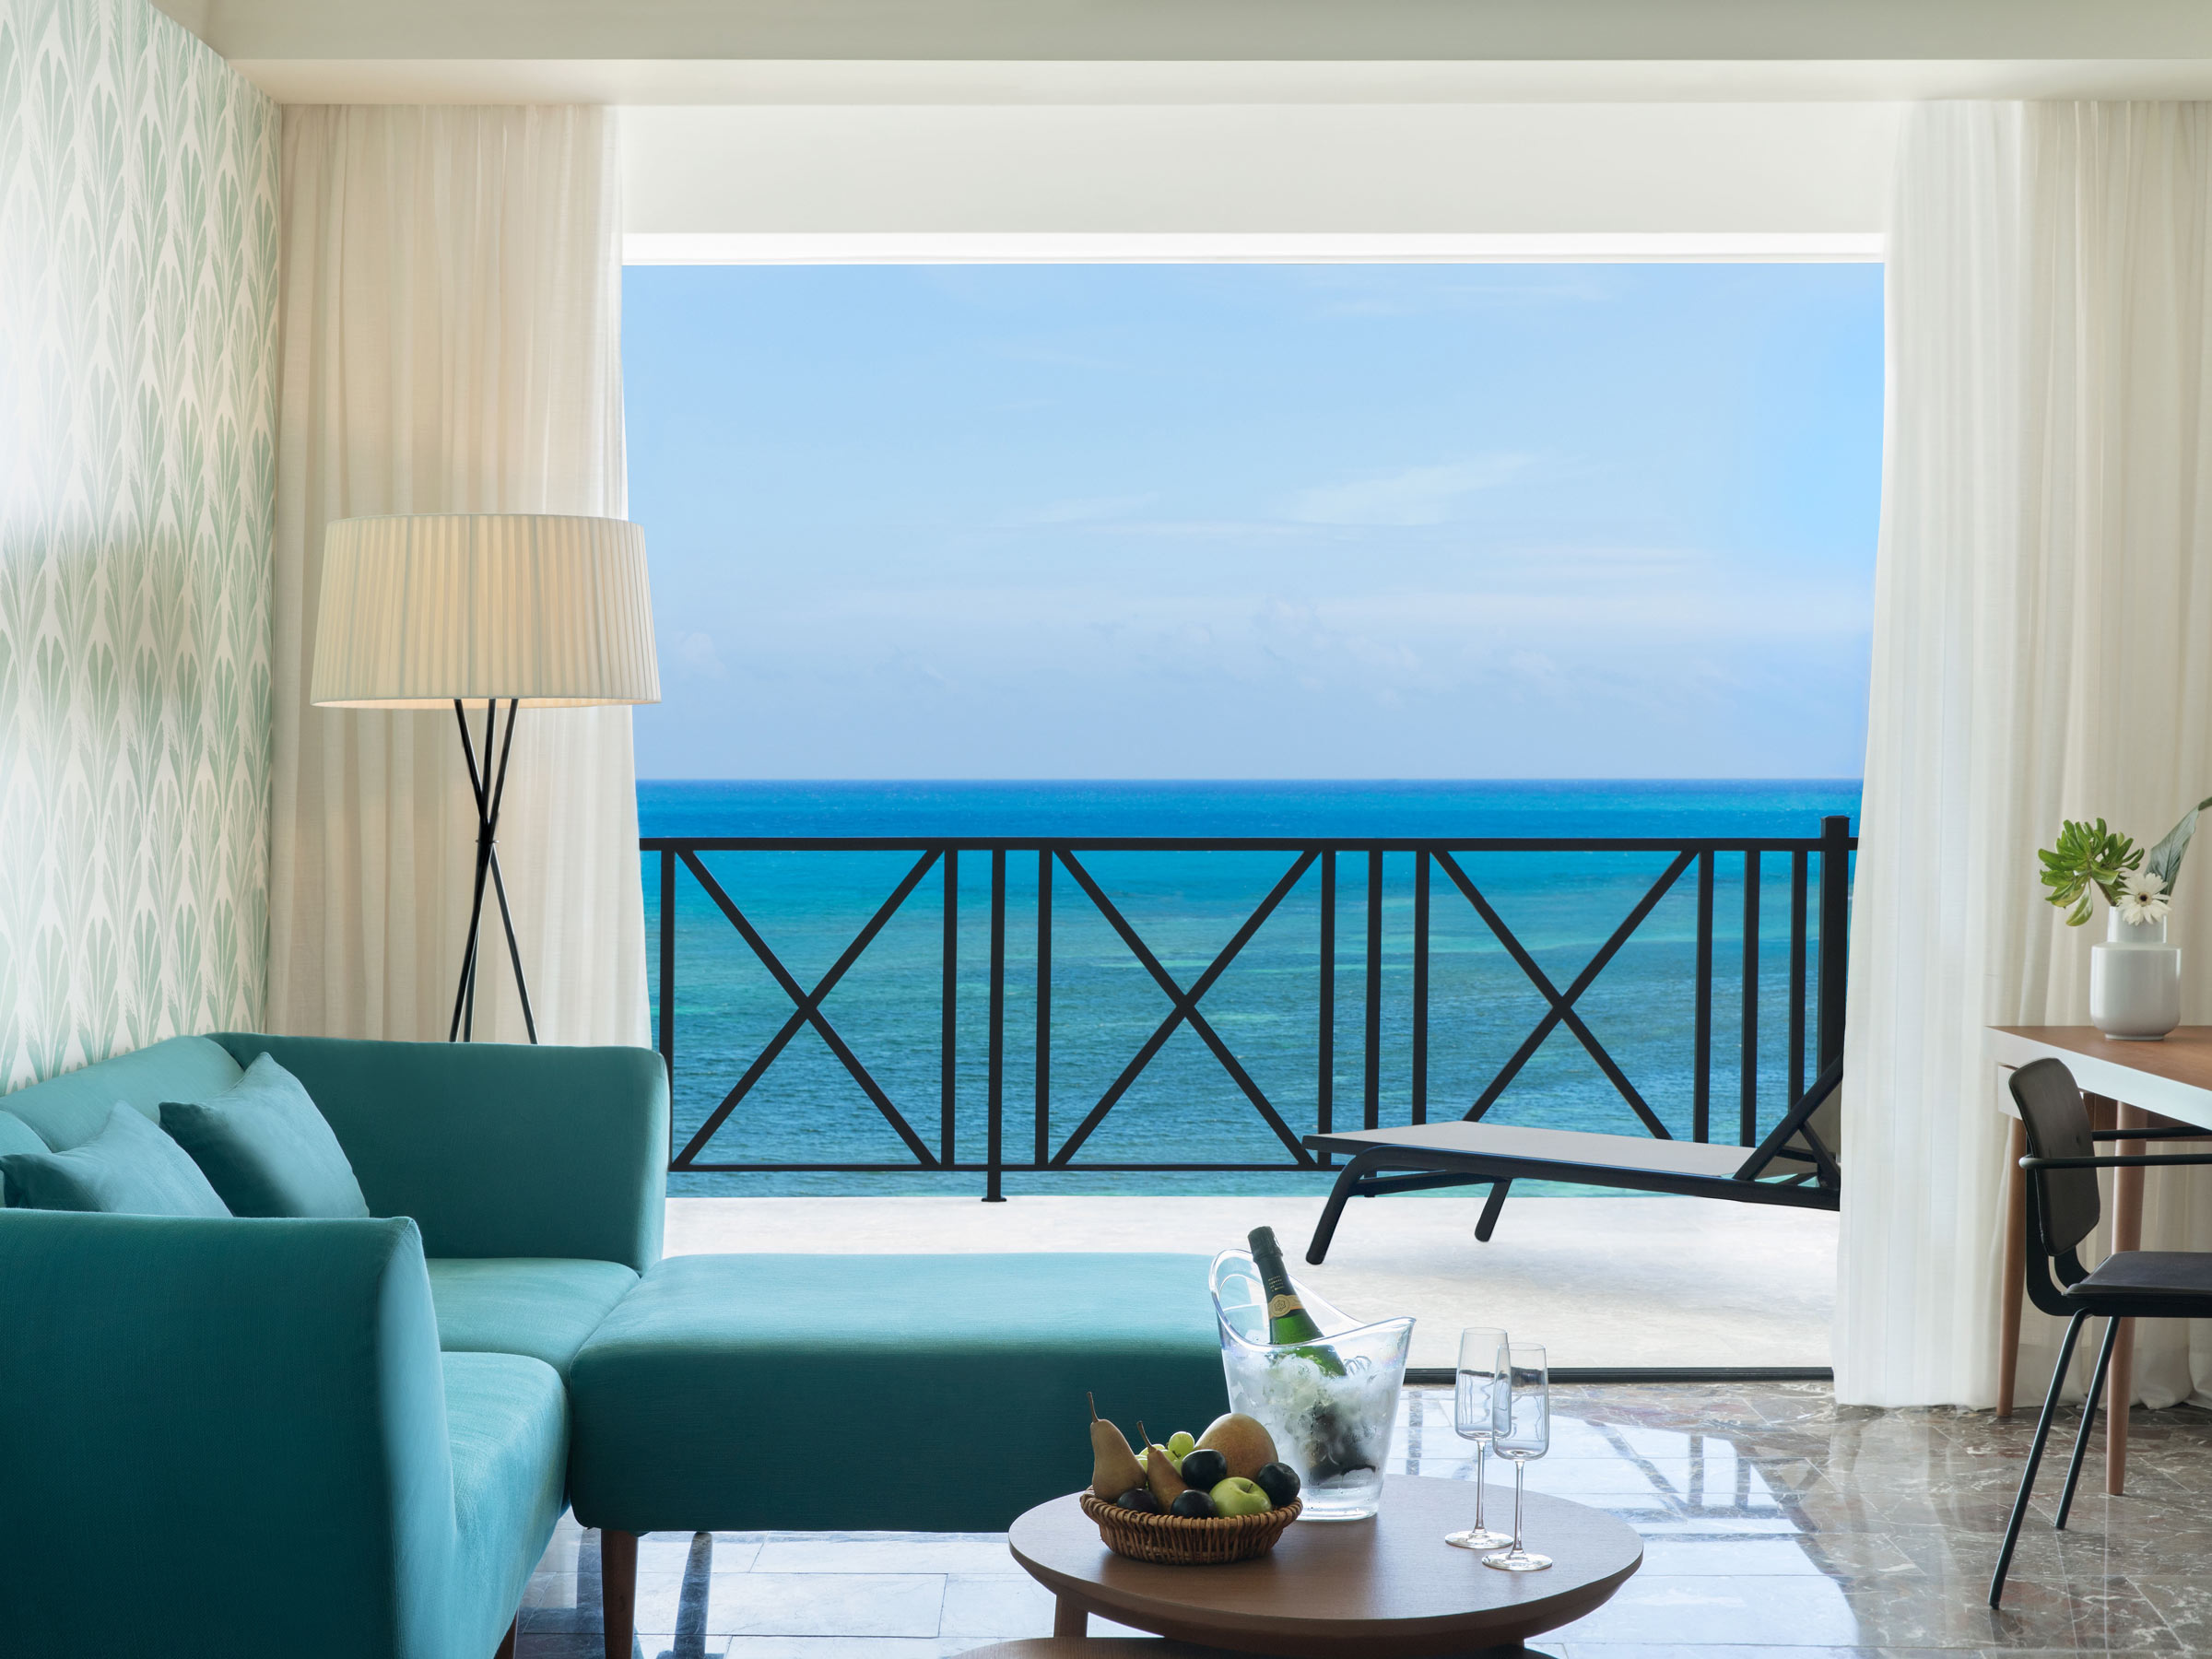 Honeymoon Suites in Jamaica with Caribbean Sea Views